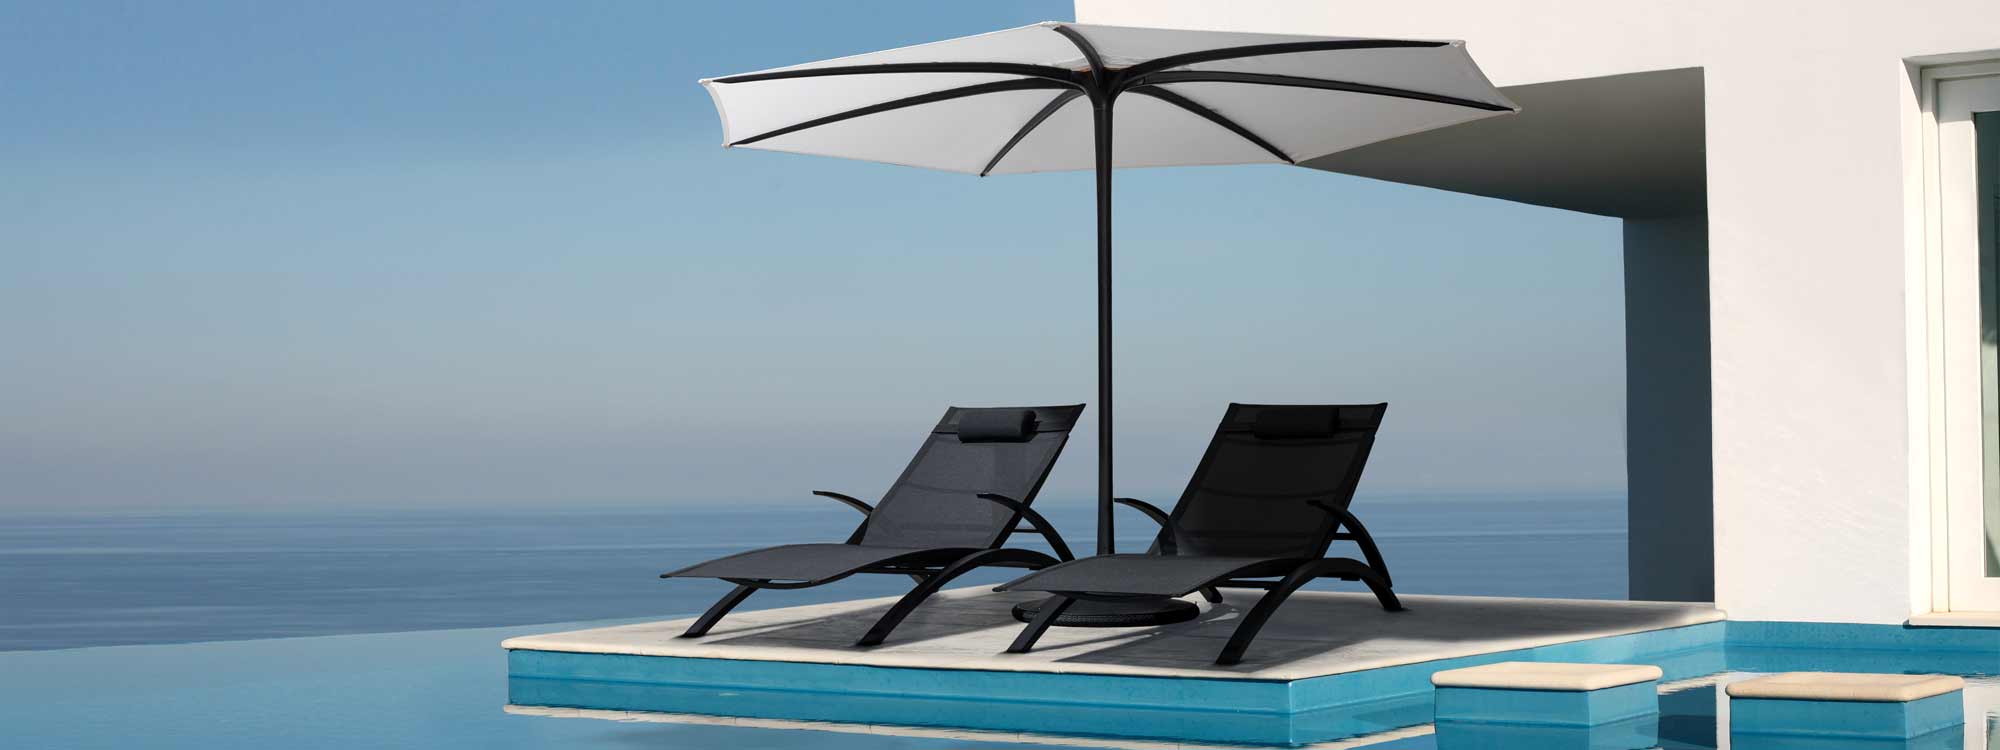 Royal Botania Palma parasol & black OZON loungers next to horizon swimming pool.